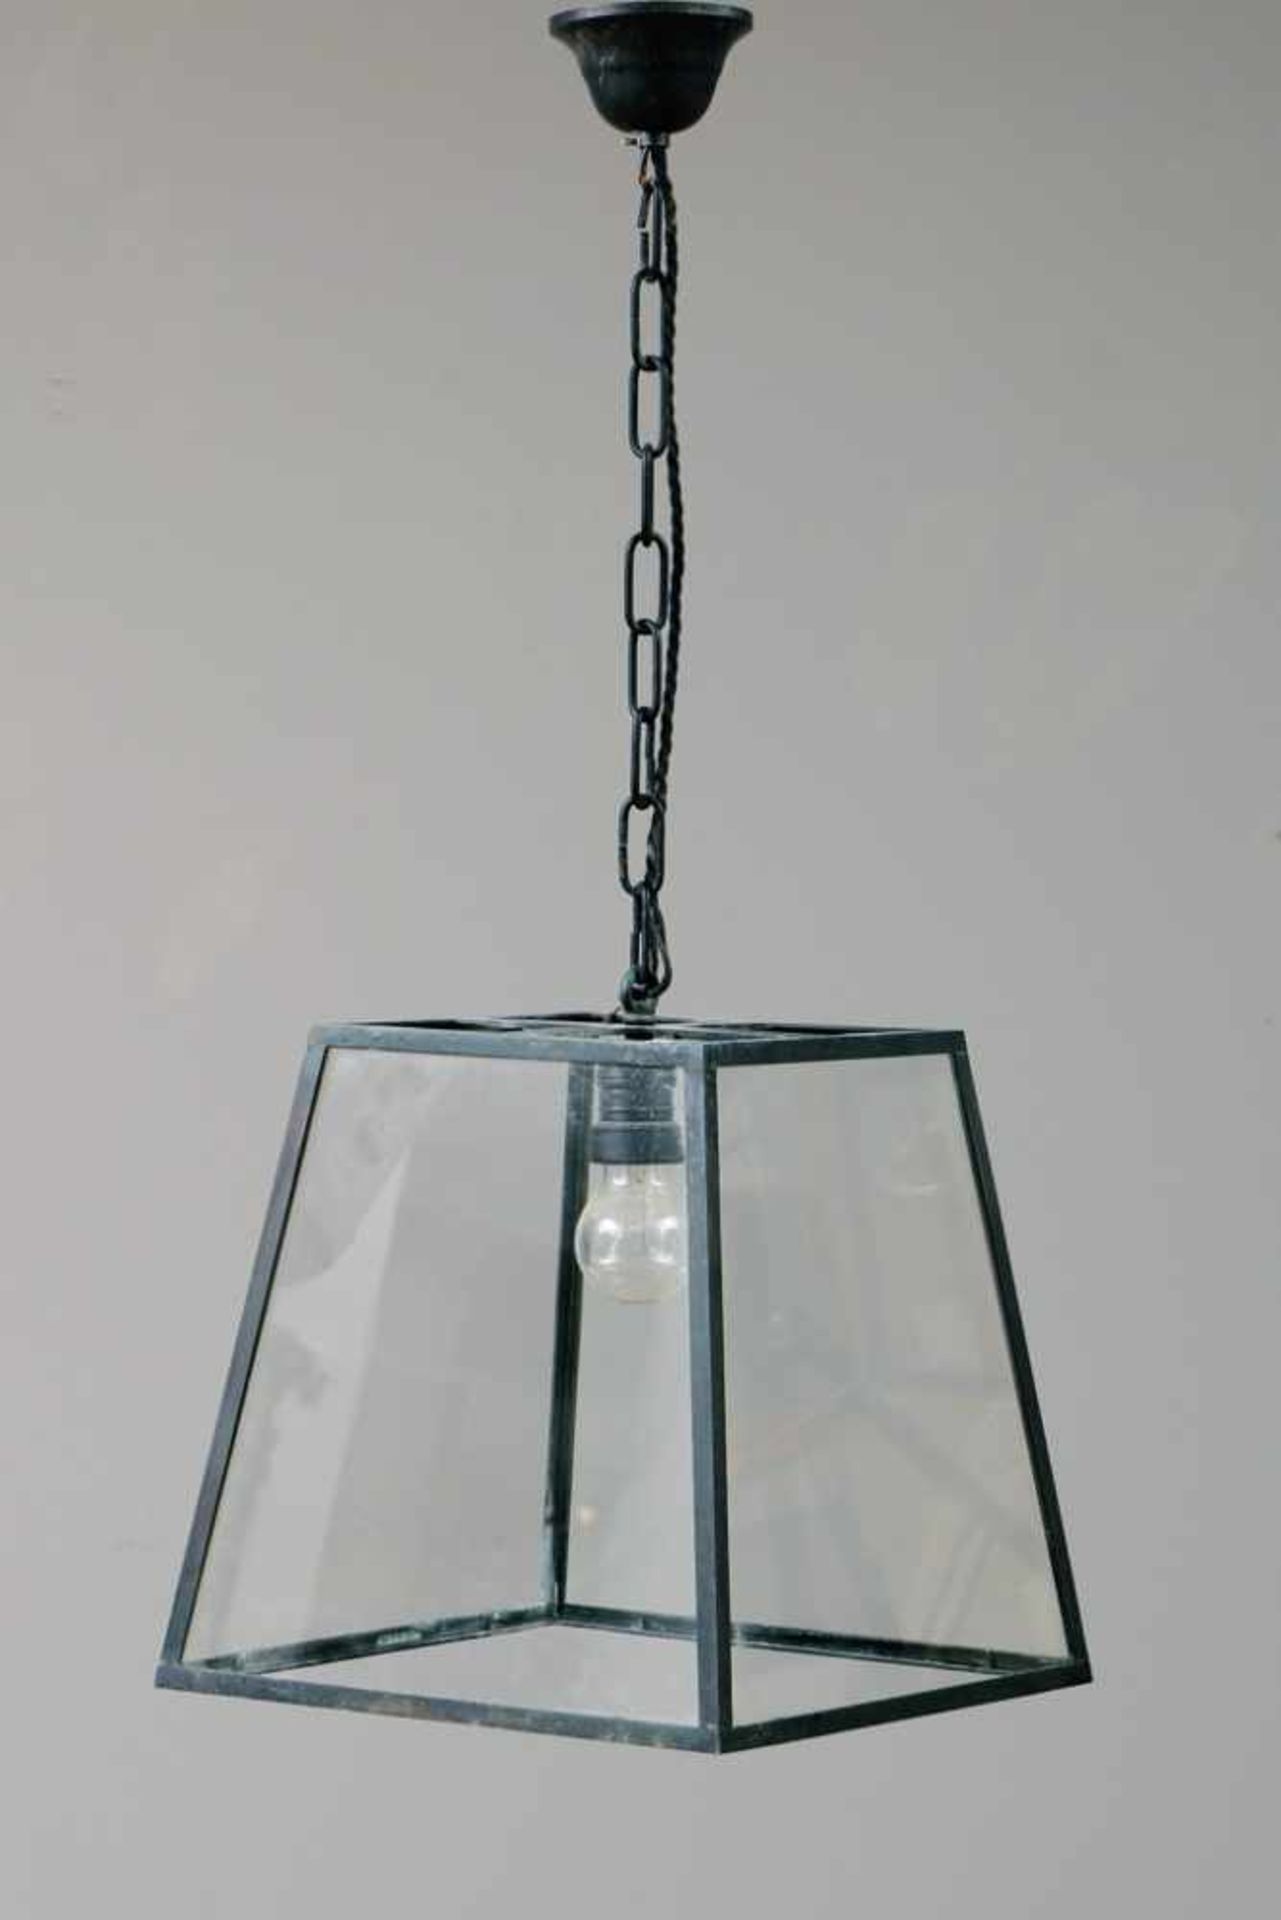 VINCENT VAN DUYSEN Laterne/Deckenlampe geschwärztes Metall, 4-seitig verglast, 1 elektrische